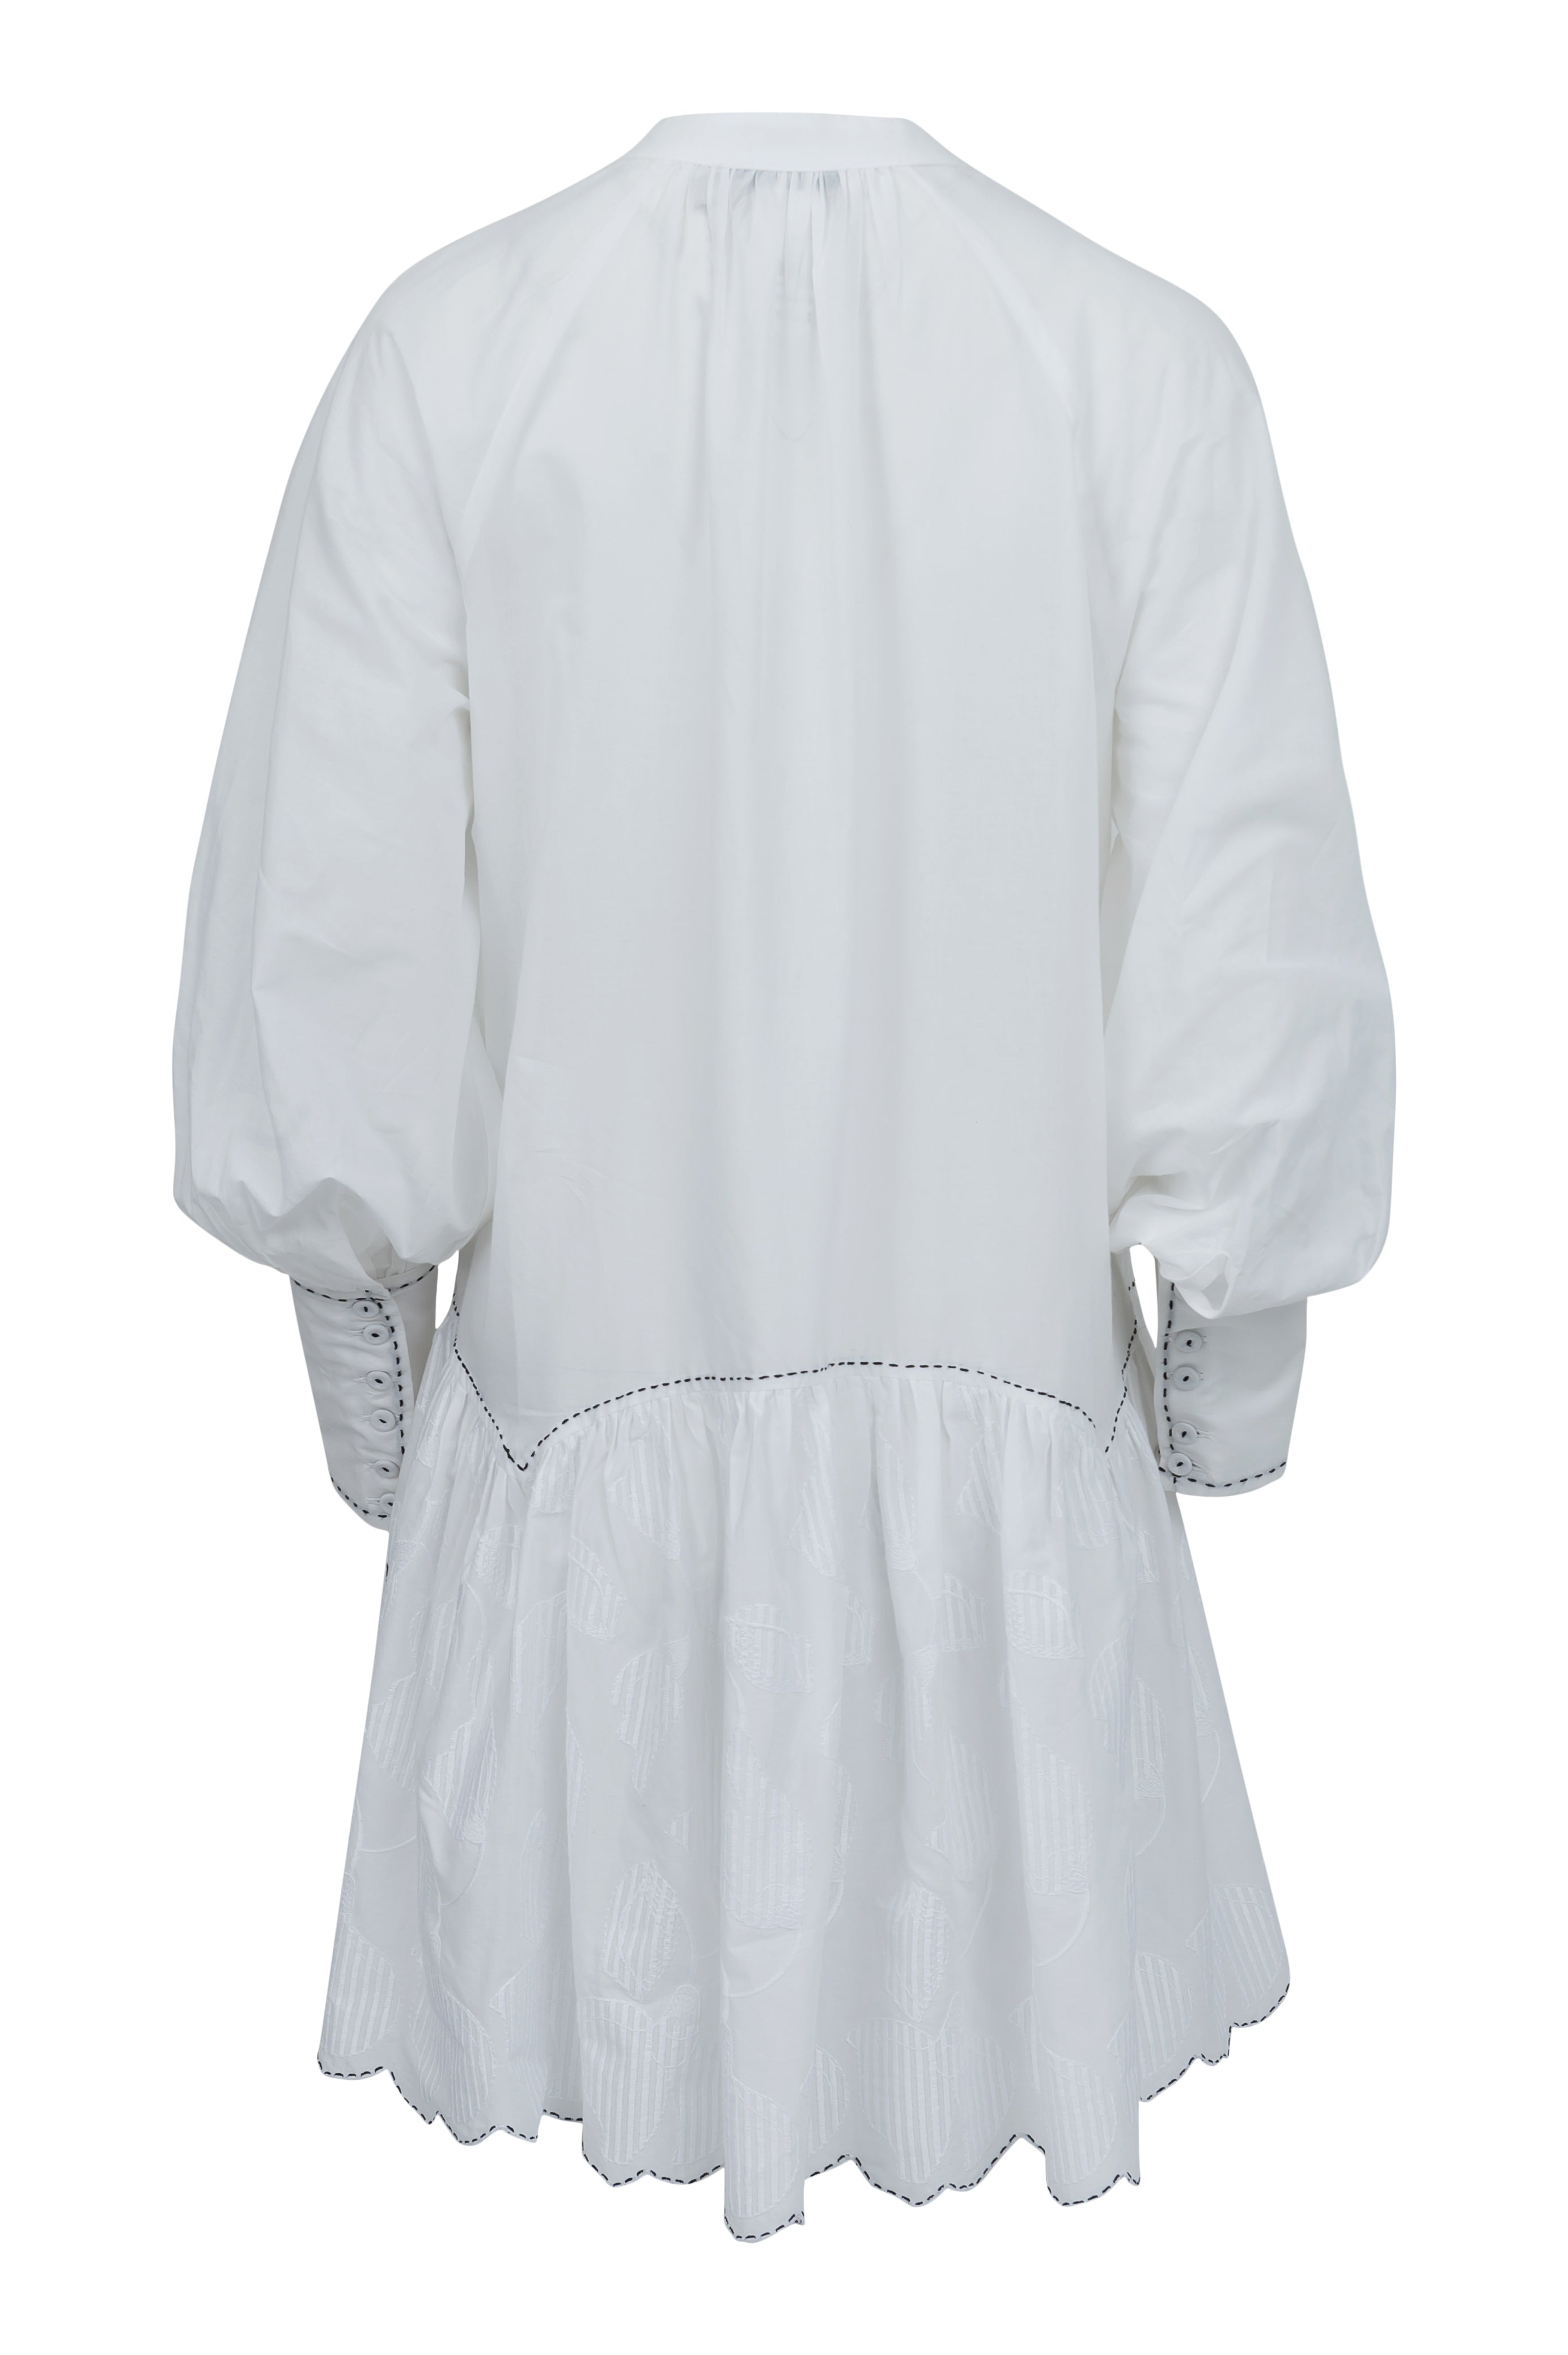 Devotion Twins - White Elephantodoto dress